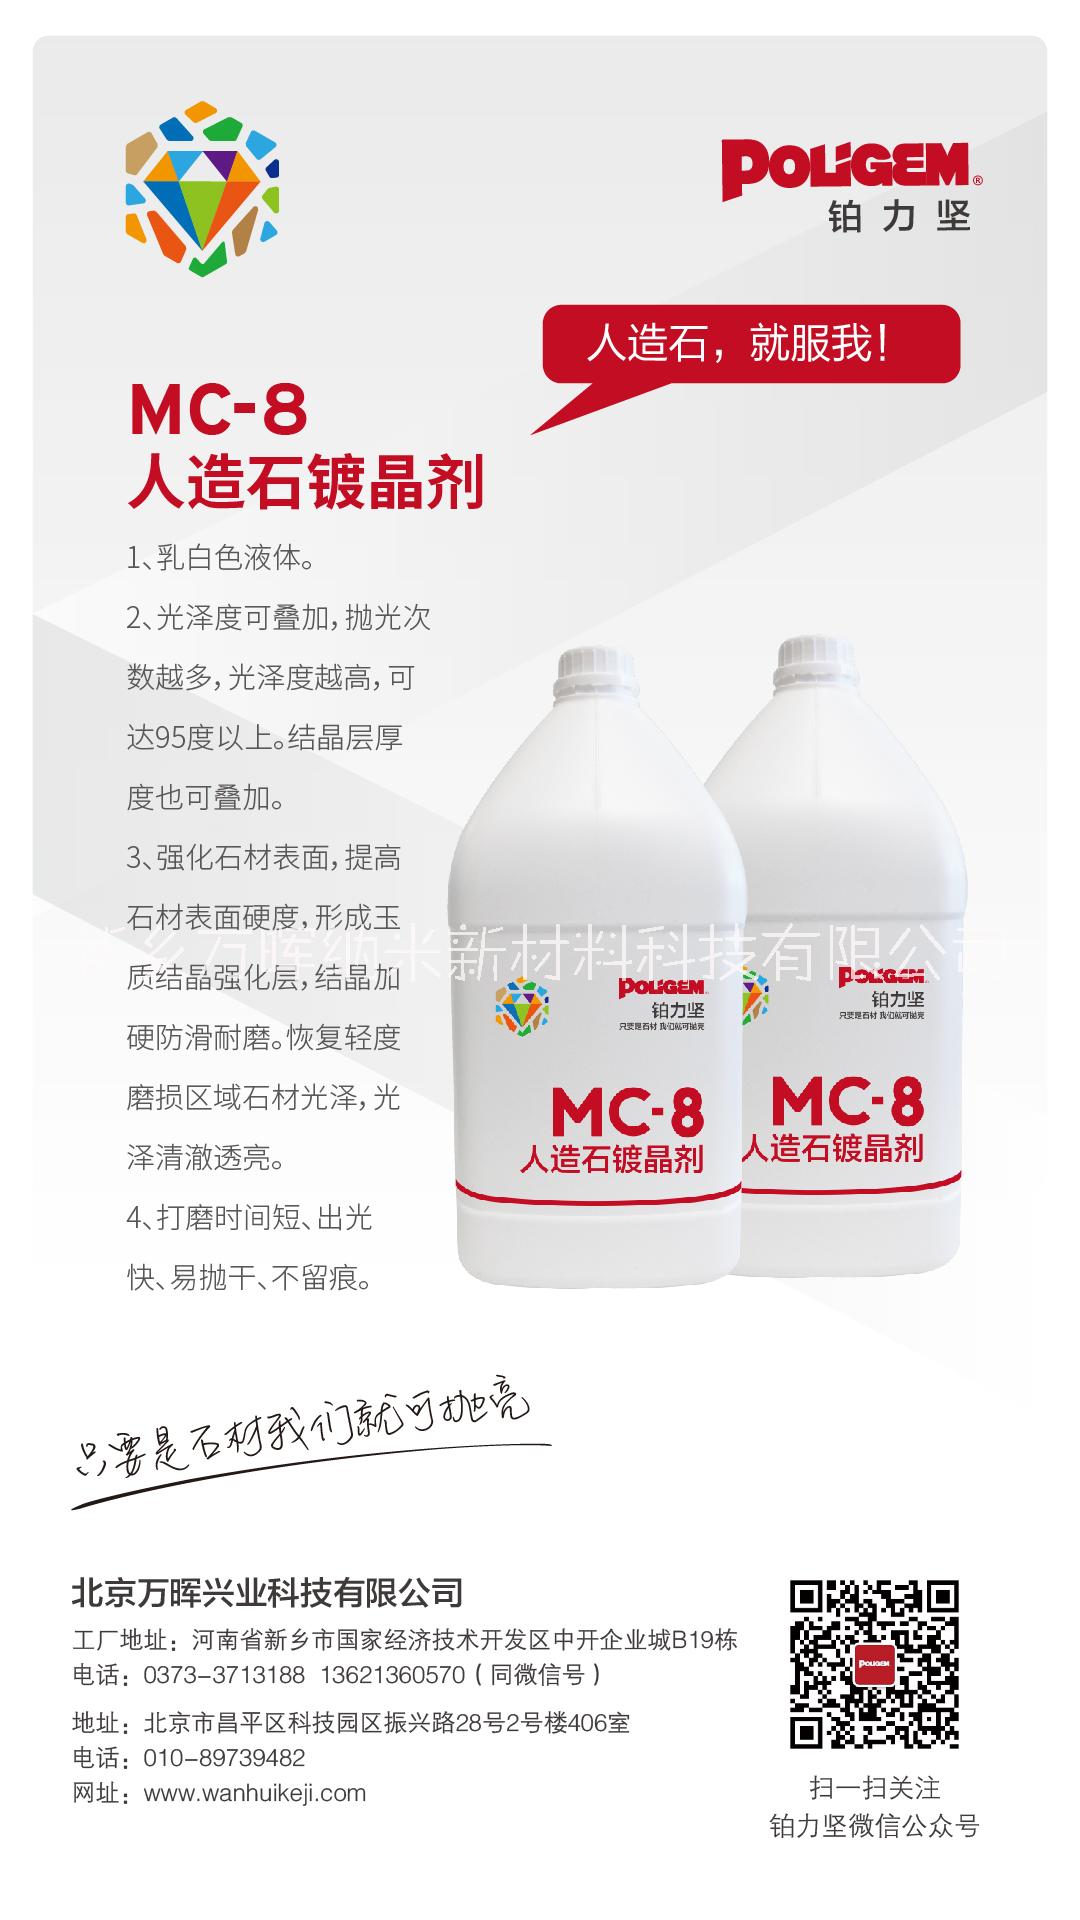 MC-8人造石镀晶剂